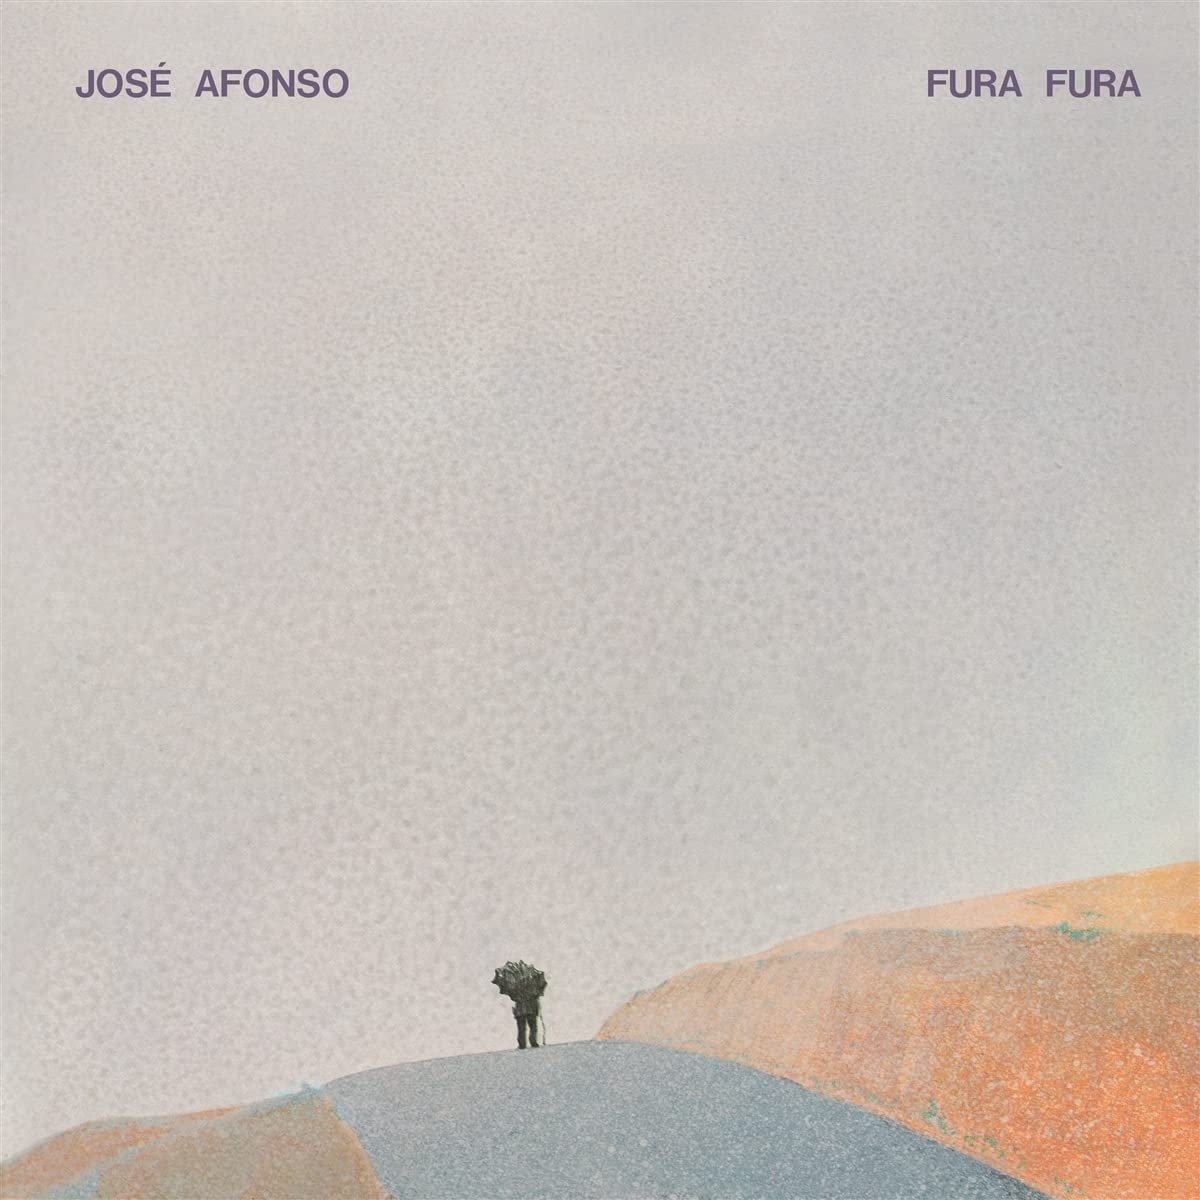 CD Shop - AFONSO, JOSE FURA FURA